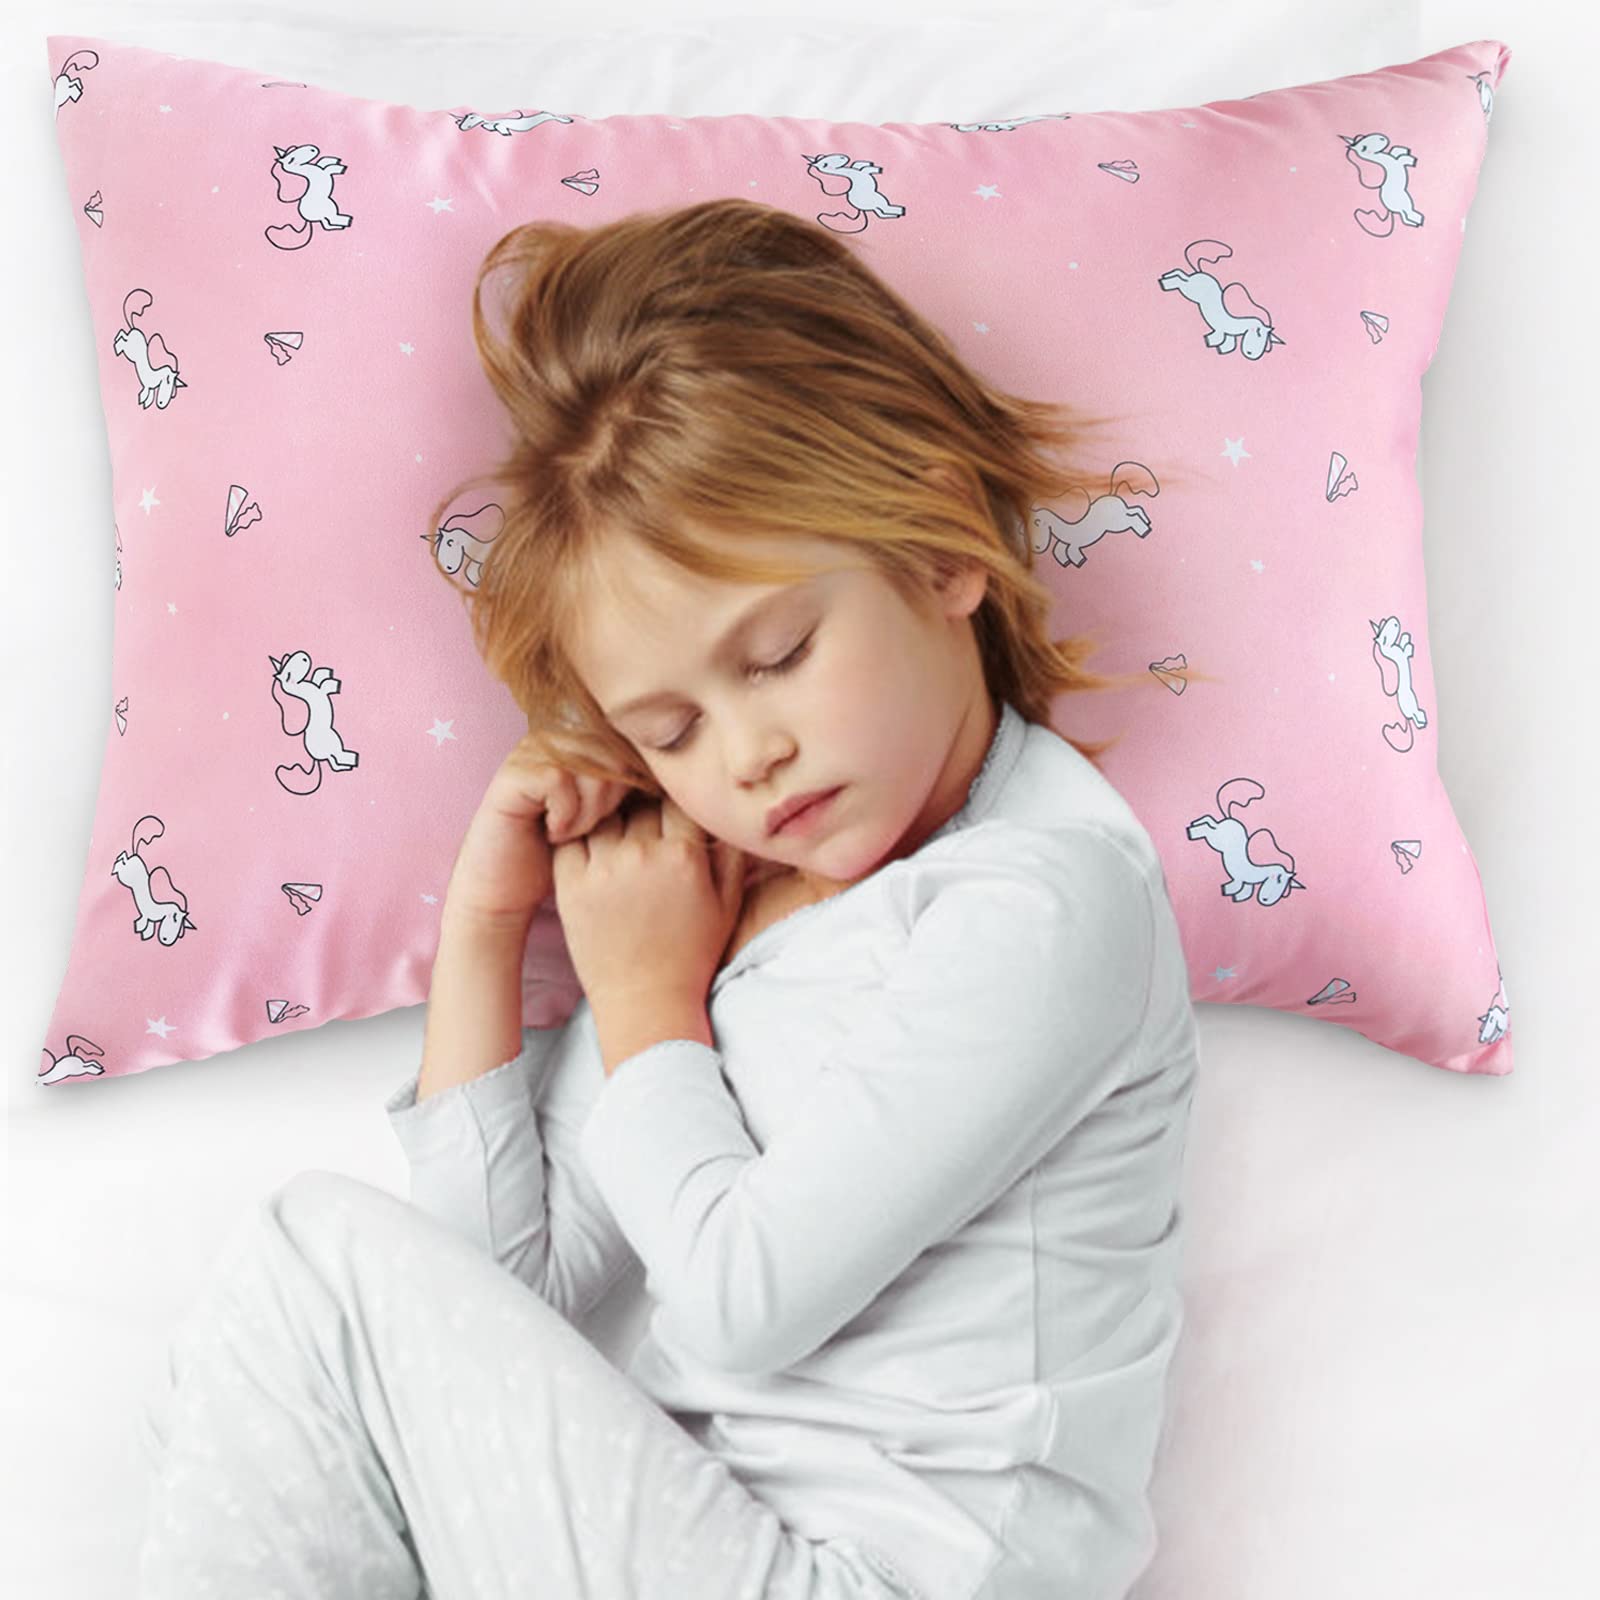 SPRINGSPIRIT Baby Toddler Pillow for Girls 2 Pack Ultra Soft & Breathable 14